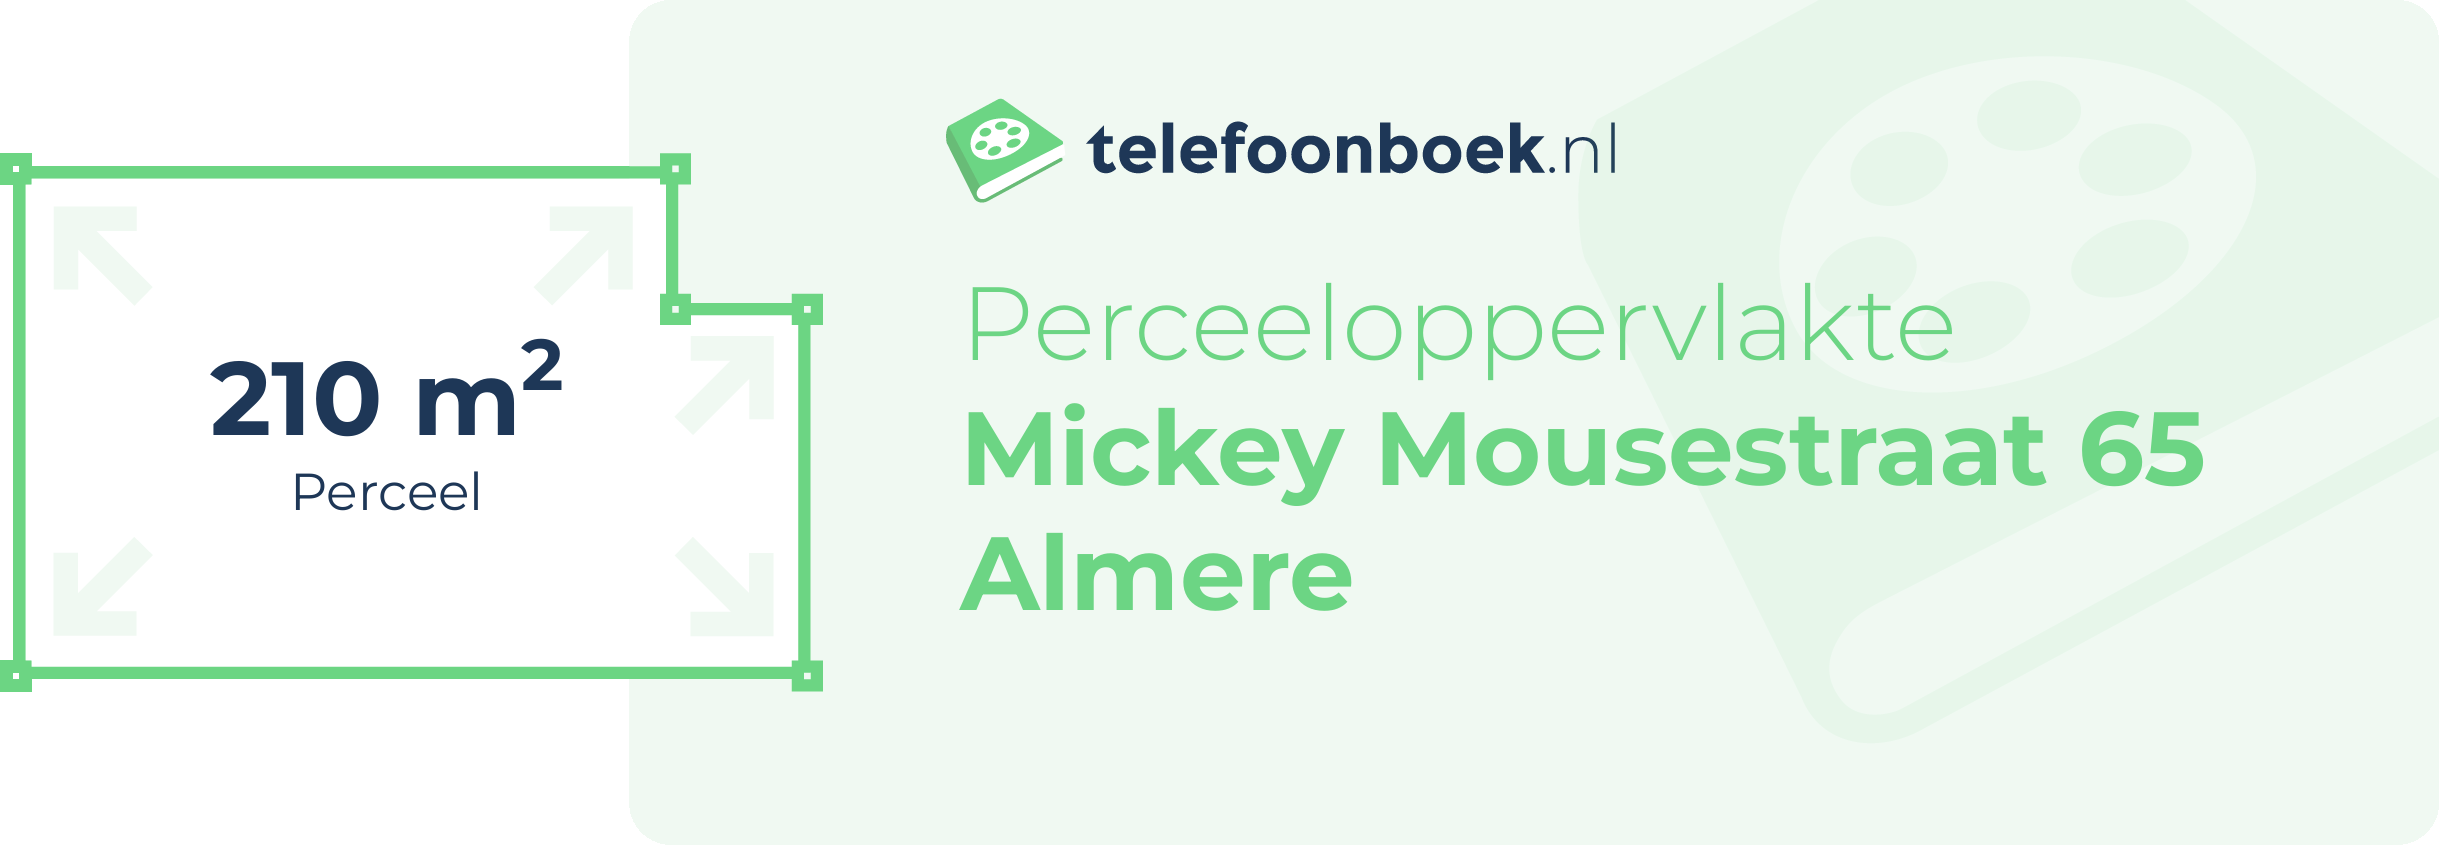 Perceeloppervlakte Mickey Mousestraat 65 Almere